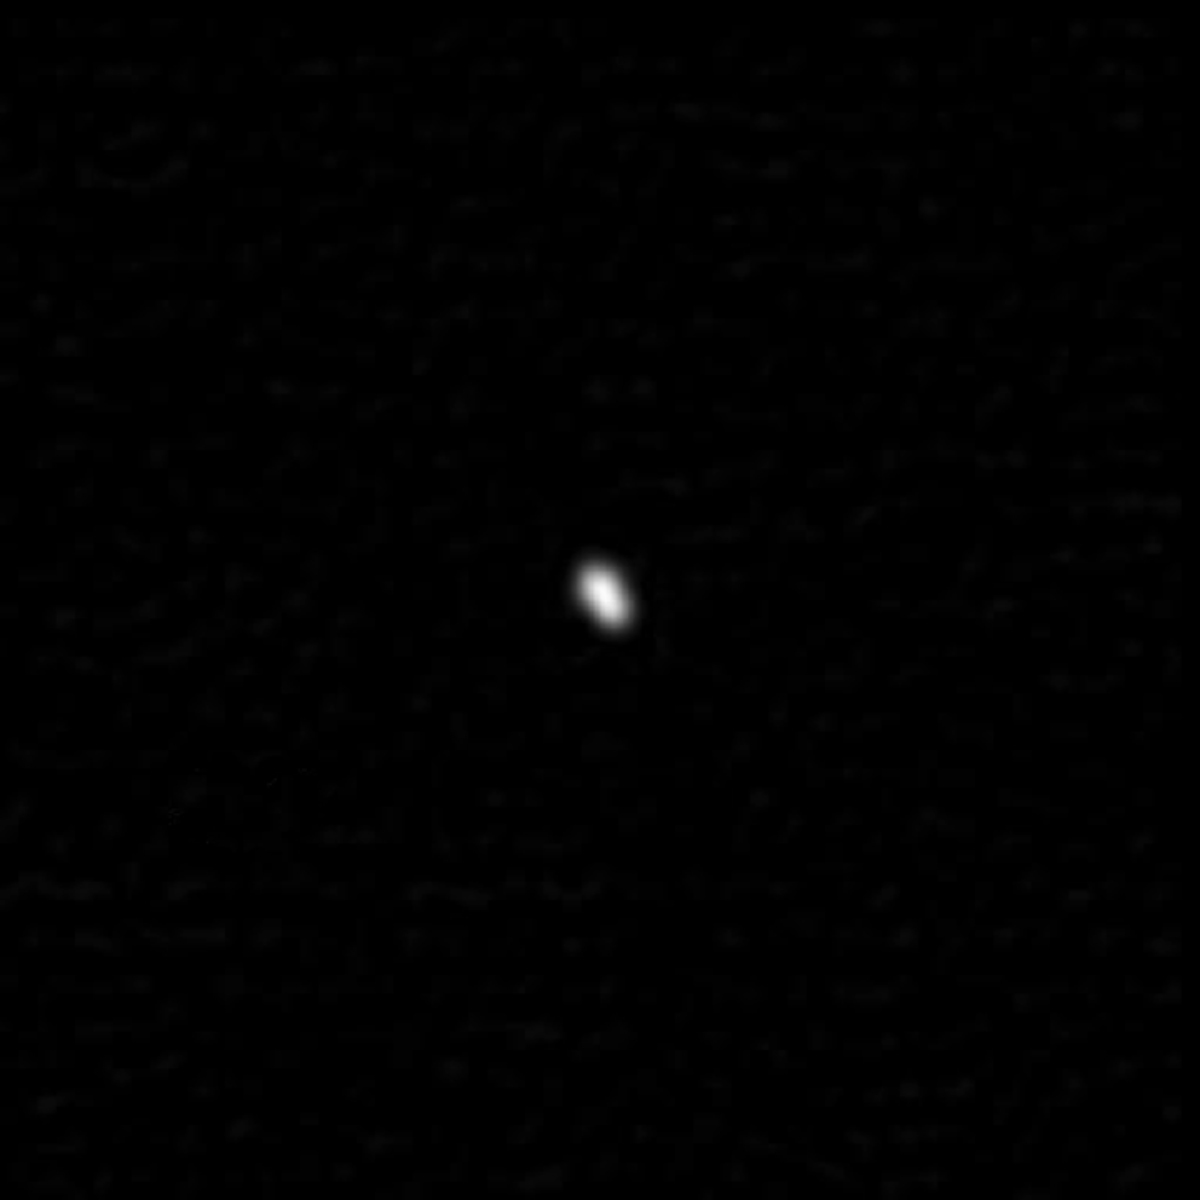 Pluto moon, Styx, taken by New Horizons